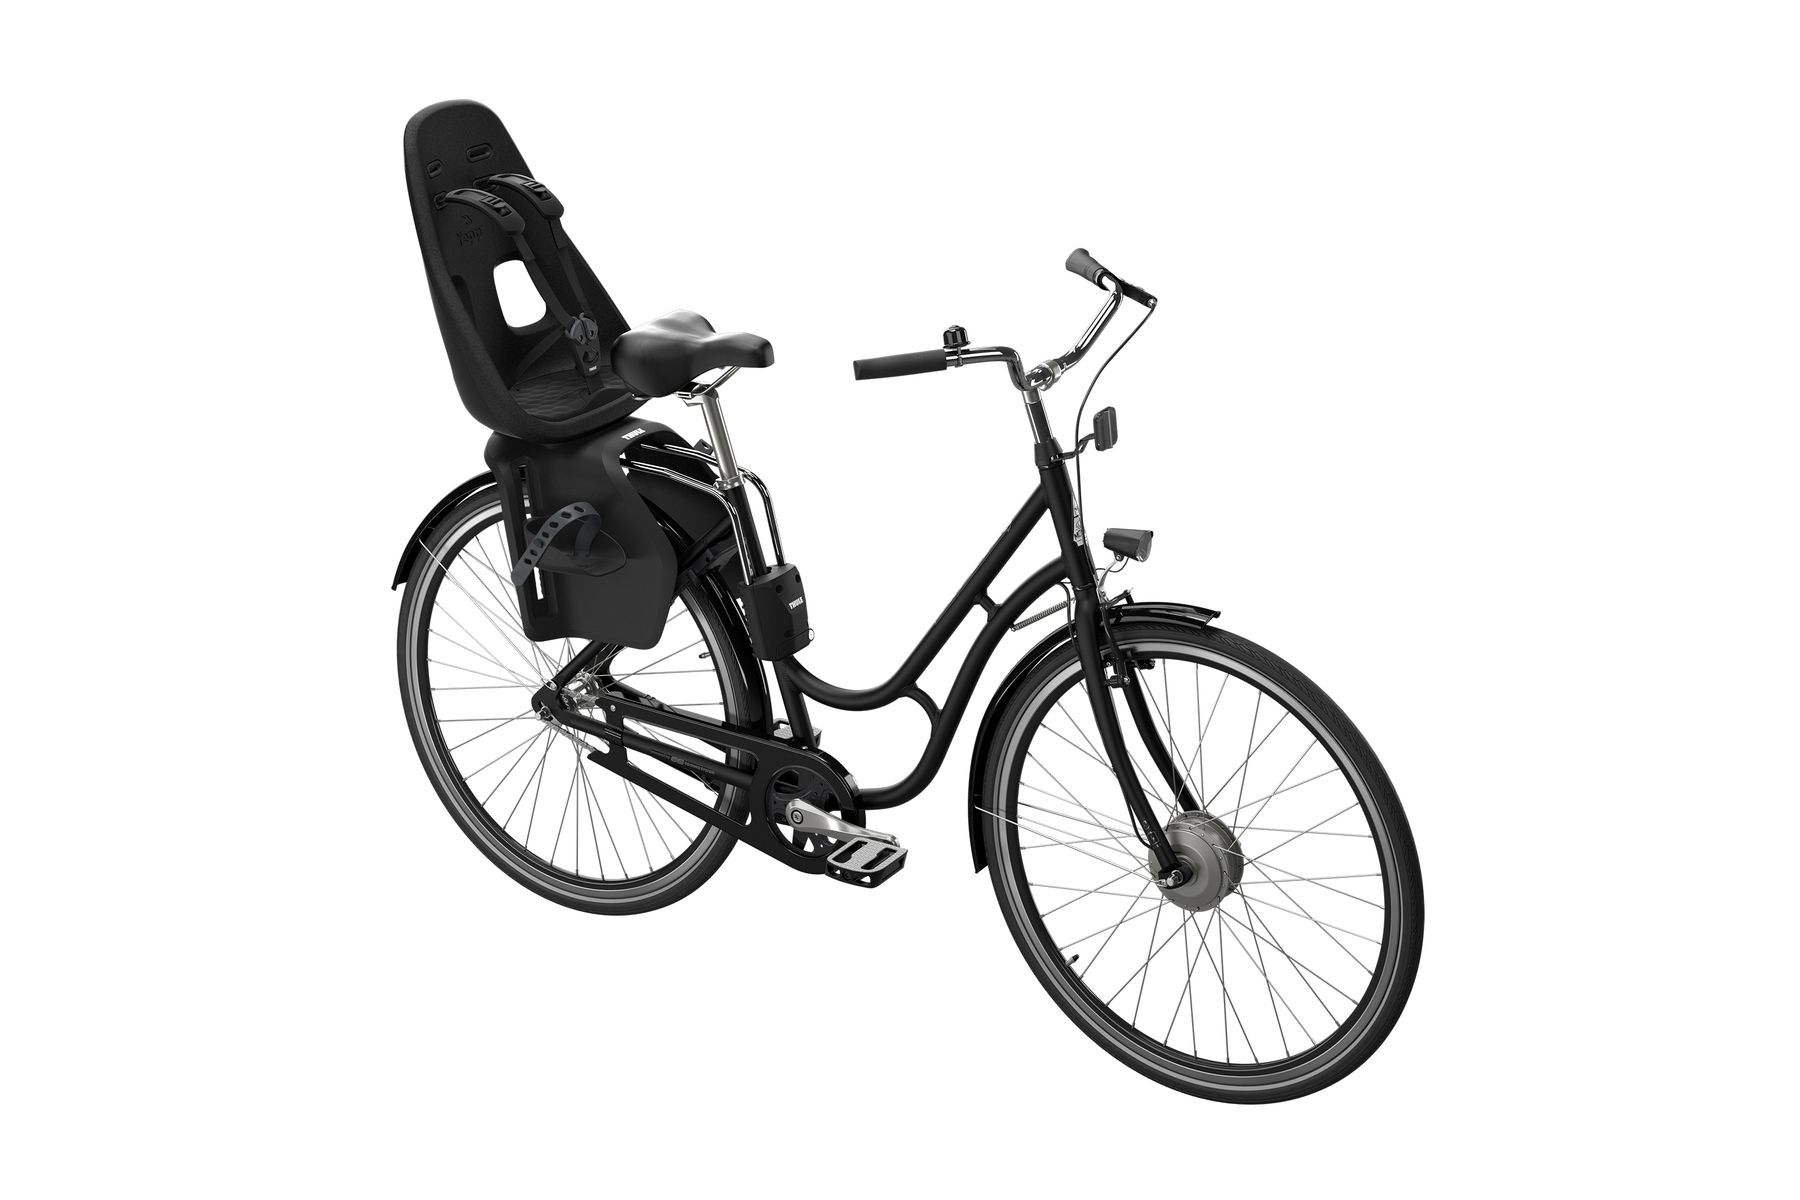 Thule Yepp Nexxt Maxi Frame Mount Child Bike Seat